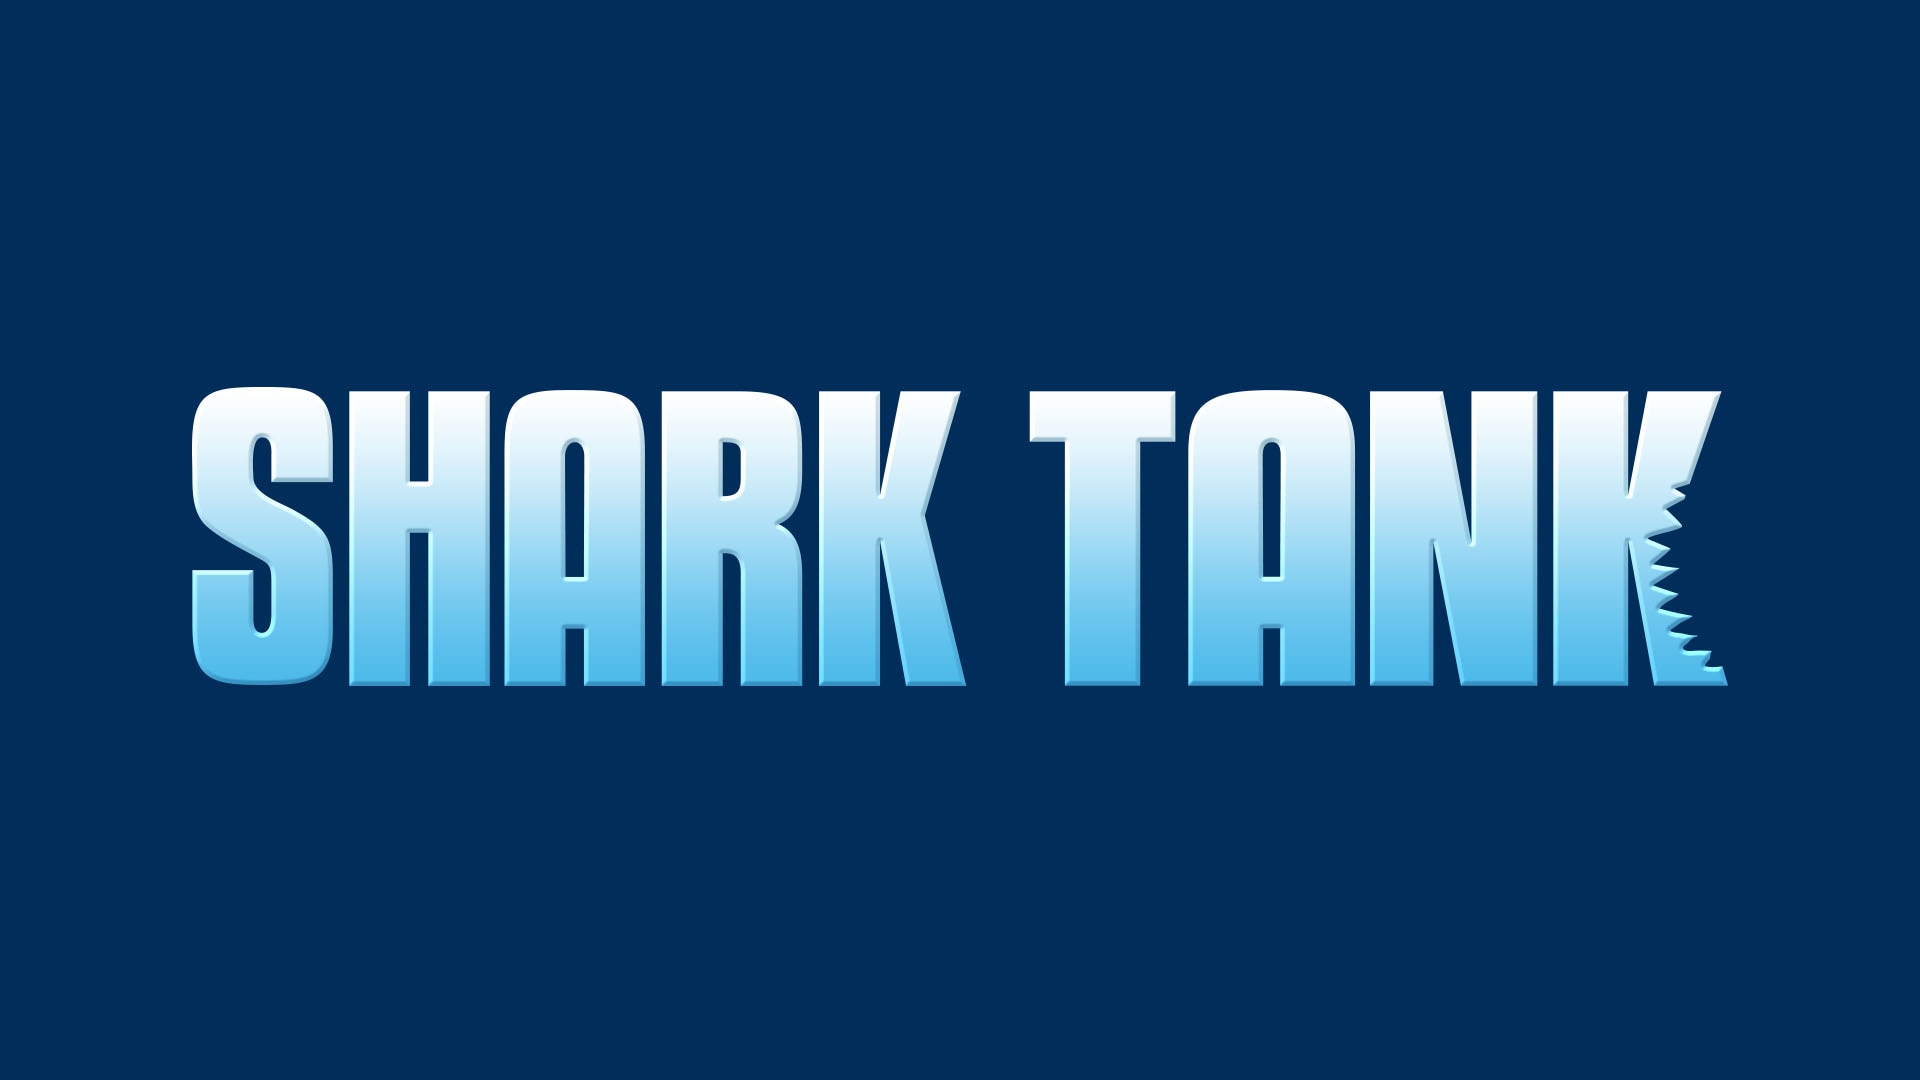 Shark Tank 